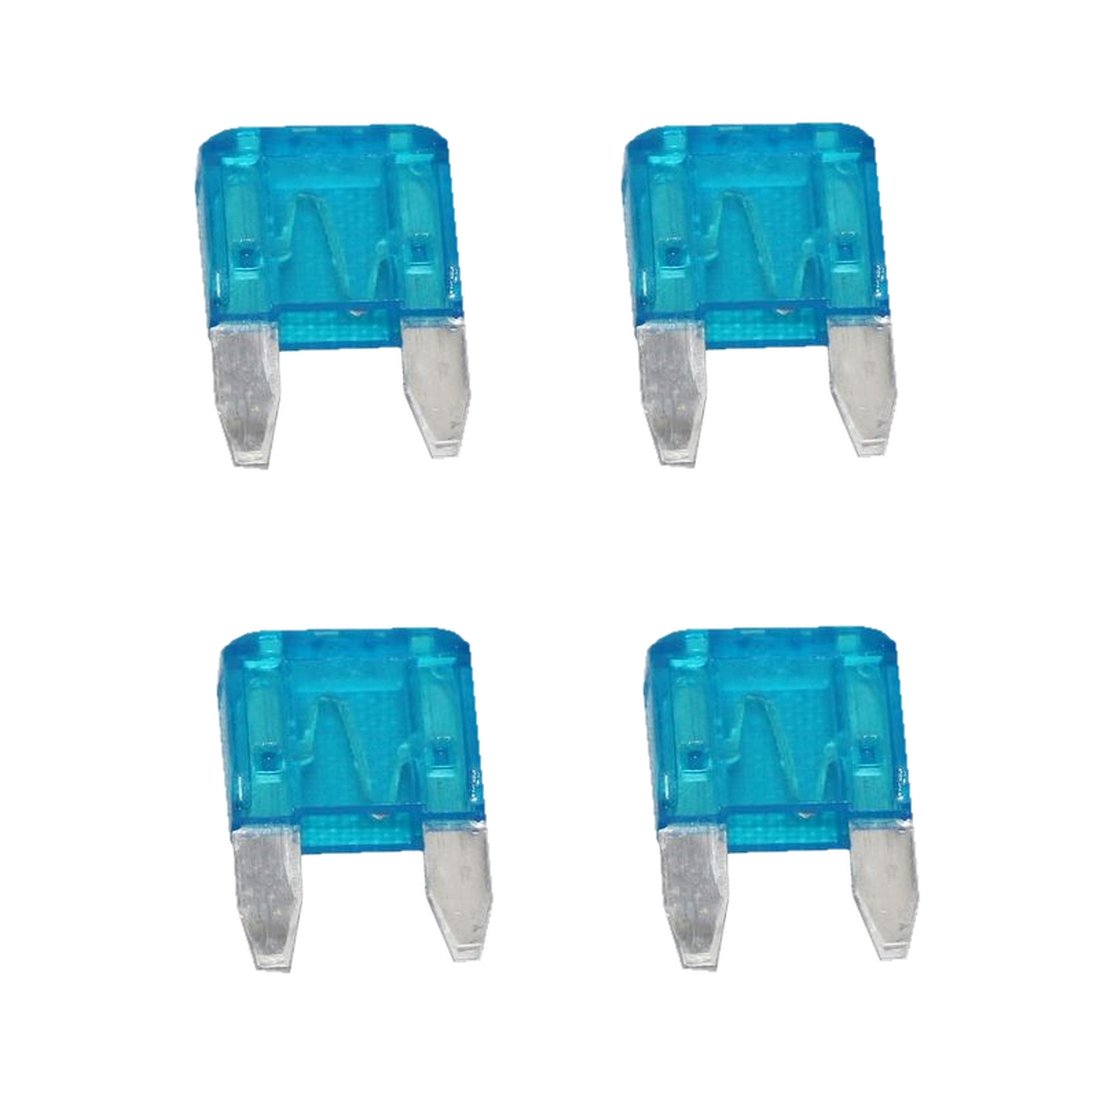 KFZ Flachsicherung mini Sicherung 15A blau 4 Stück (0038) von B2Q